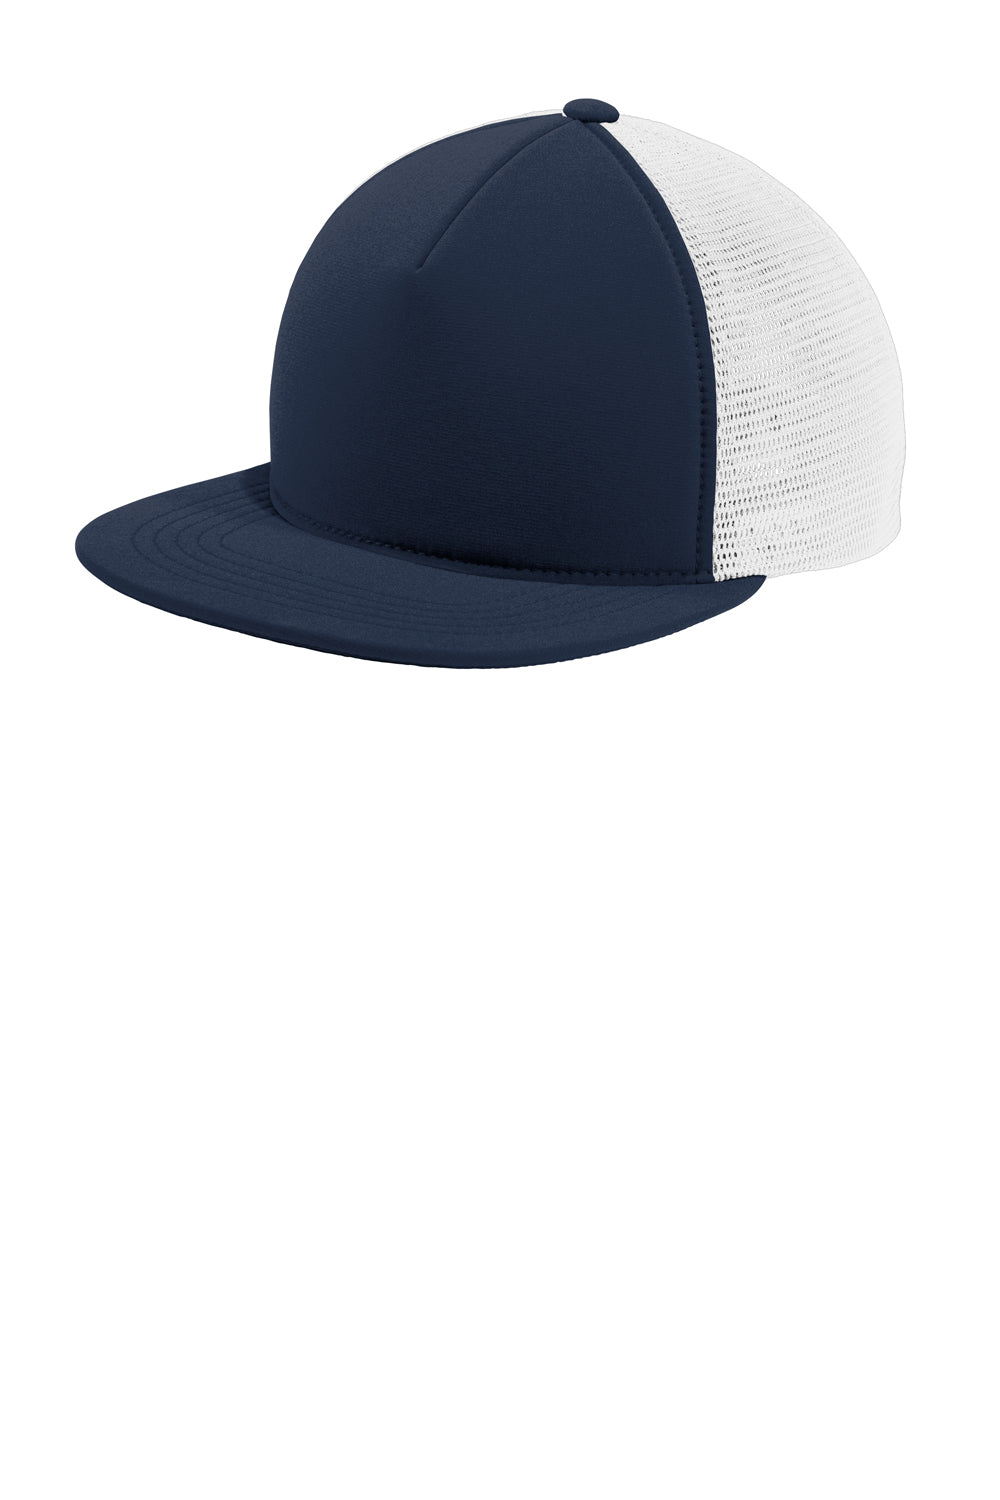 Port Authority C937 Foam Outdoor Felxfit Adjustable Hat True Navy Blue/White Front